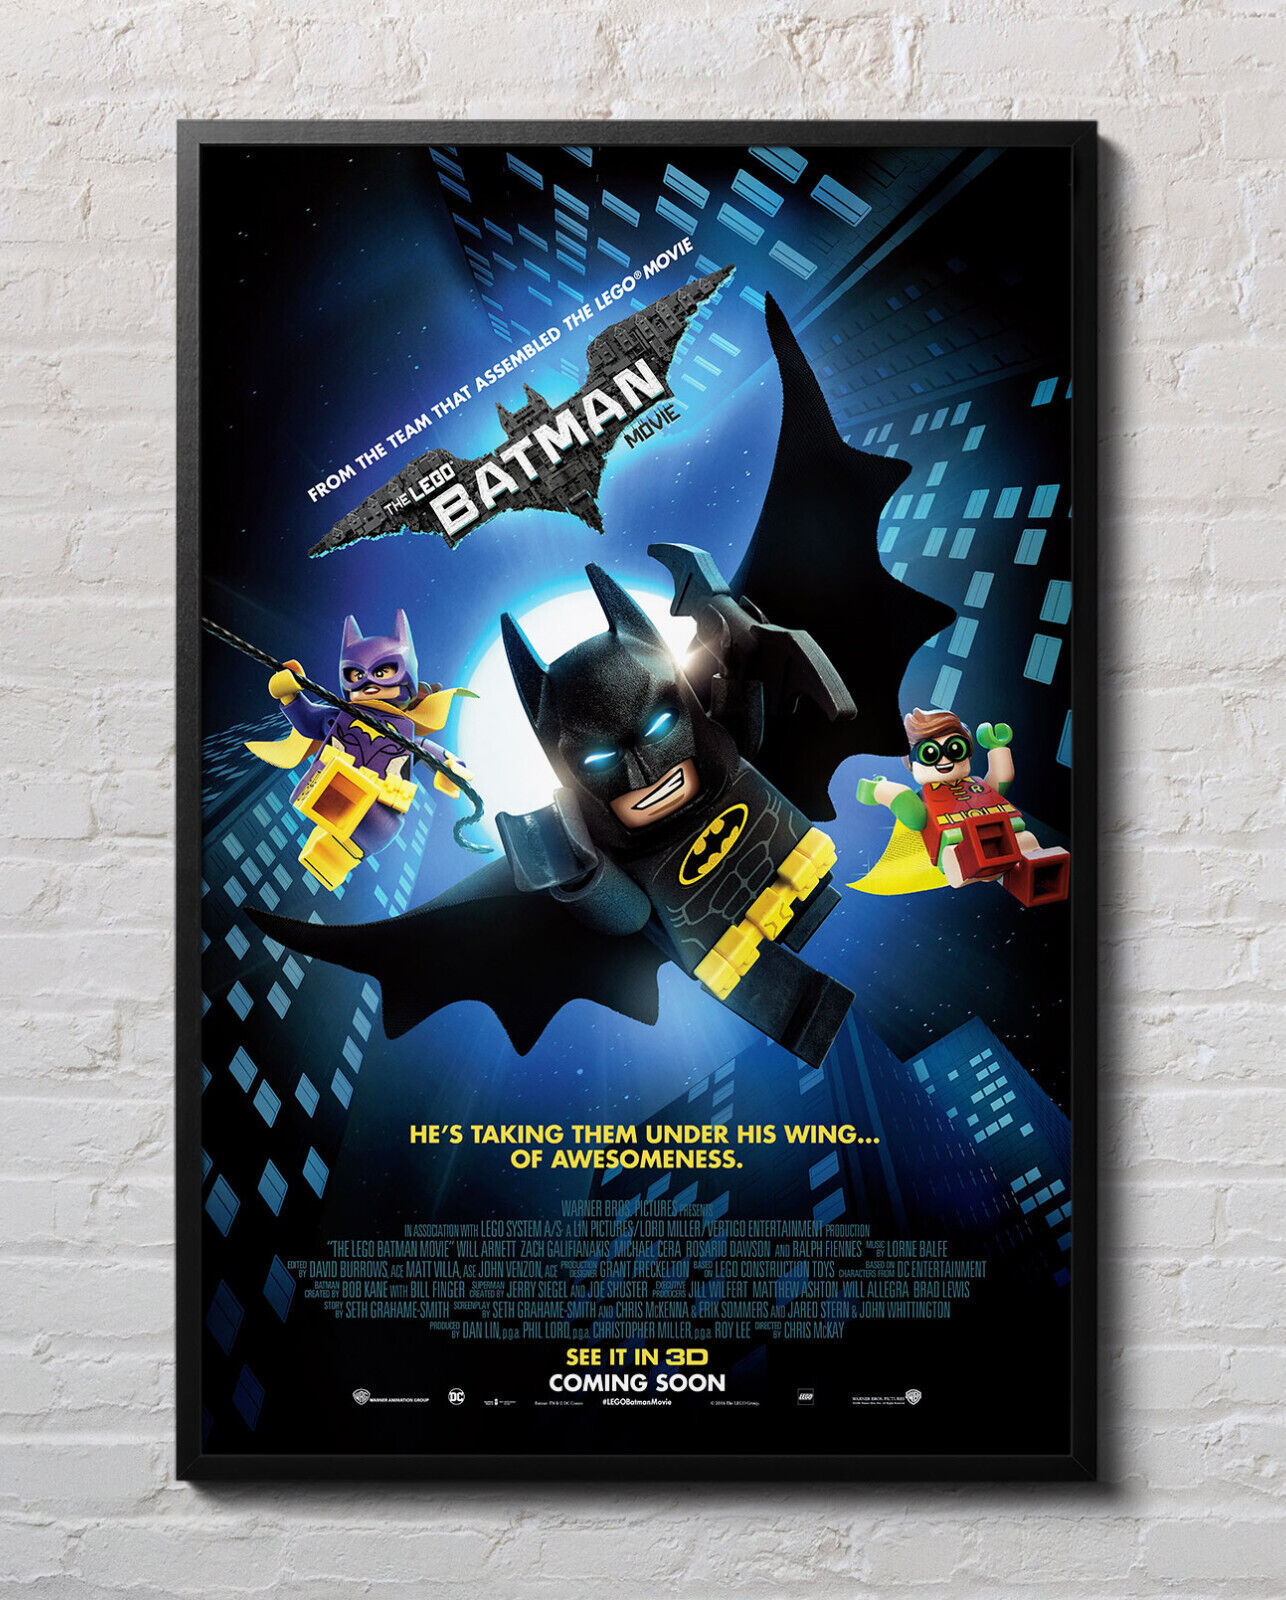 New Poster Revealed for LEGO Batman Movie